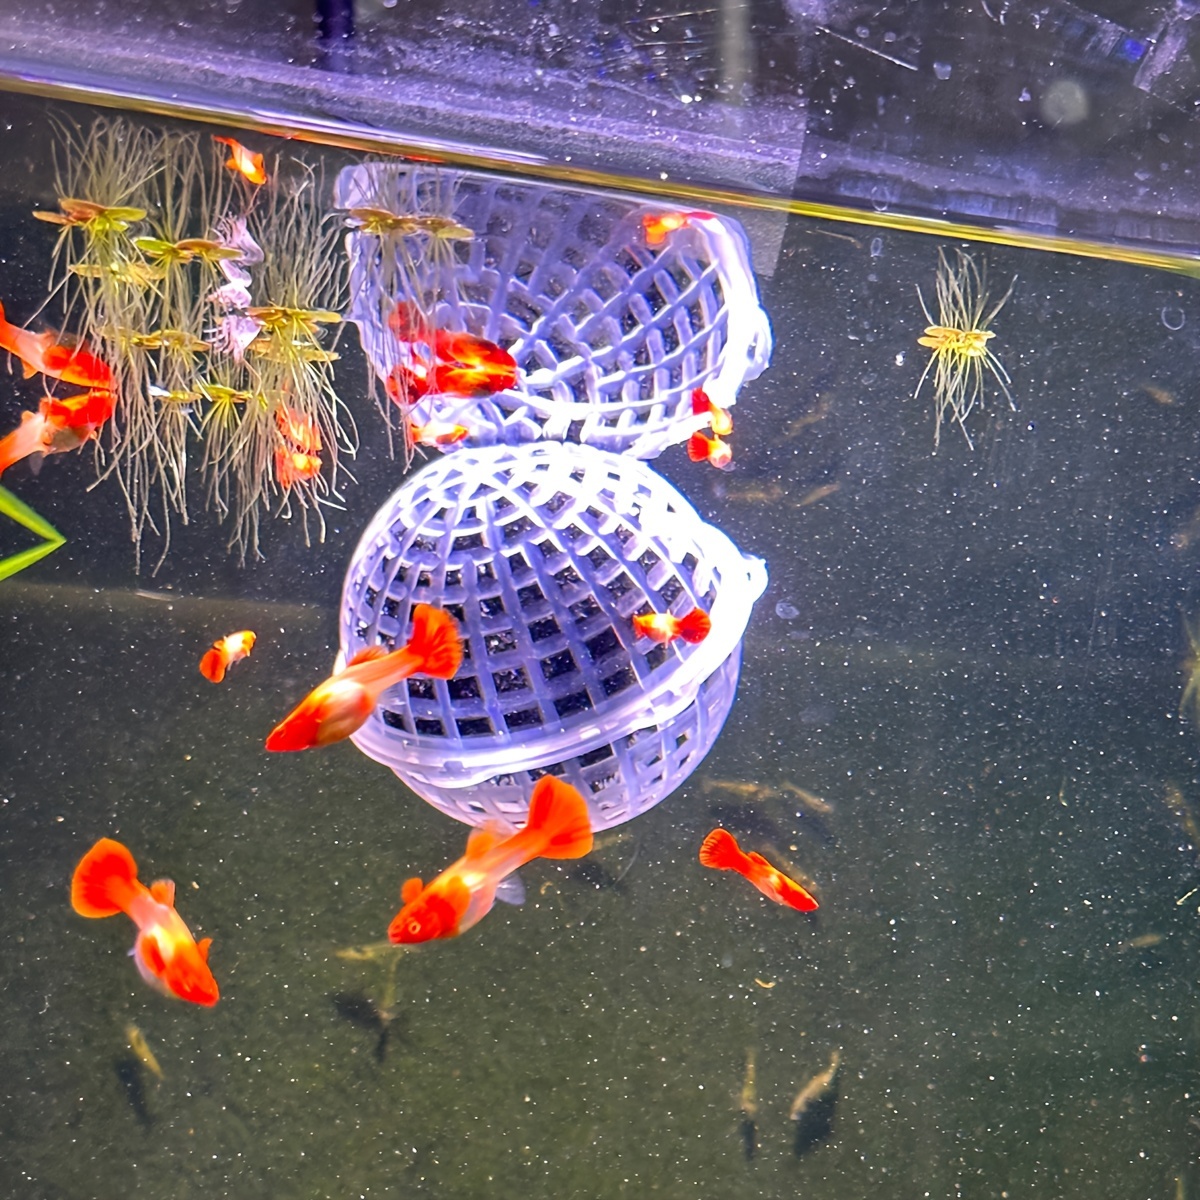 Marimo Moss Balls Aquarium Fish Tank Ornament Simulation - Temu